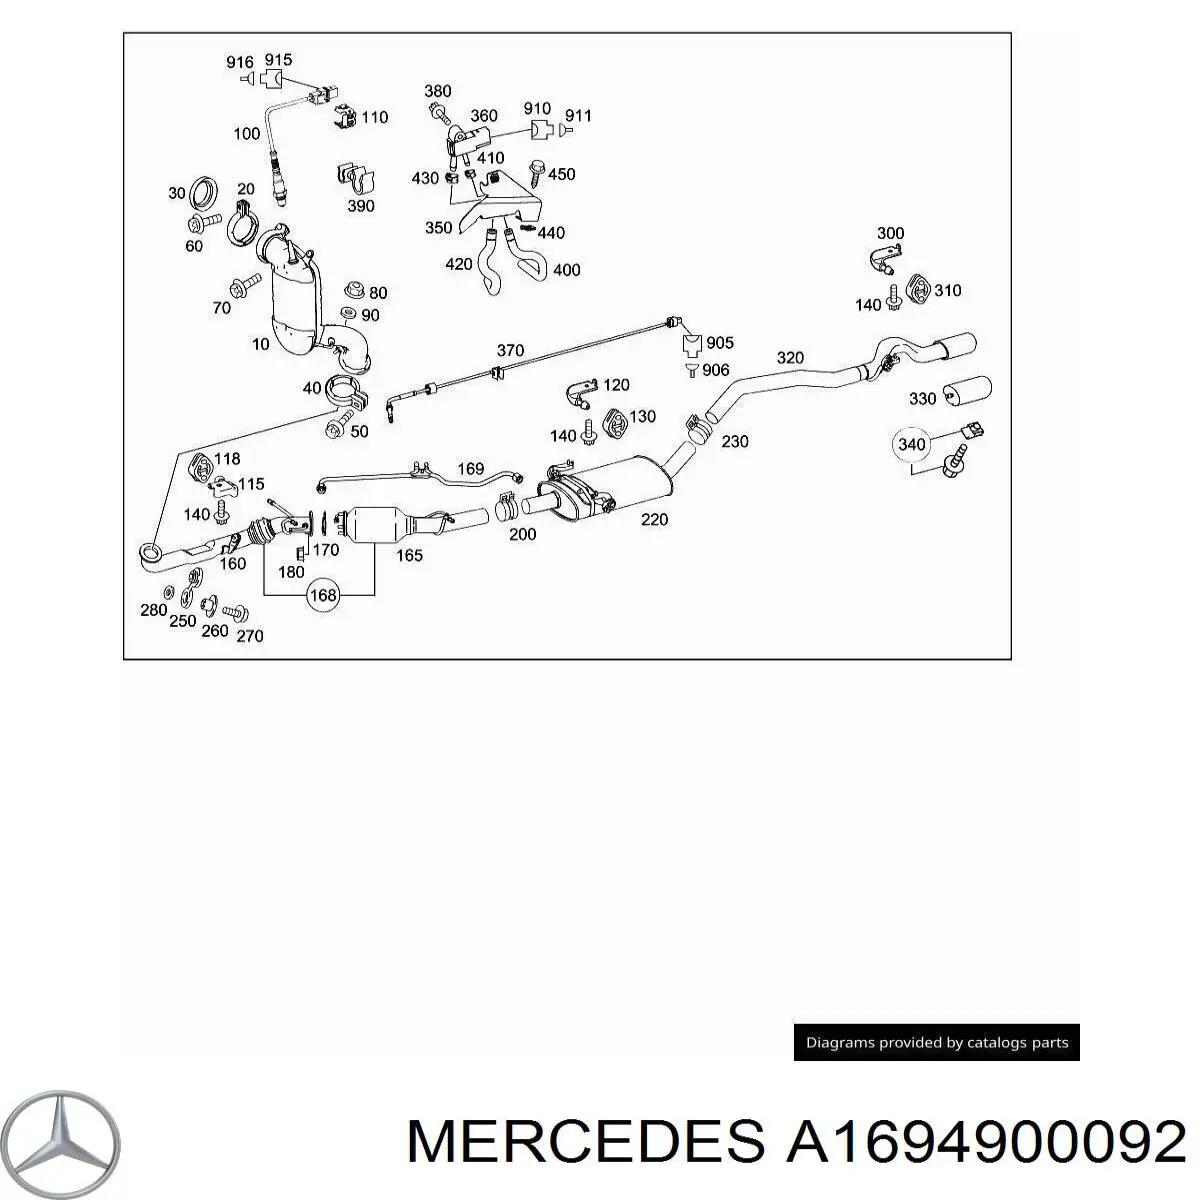 A1694900092 Mercedes